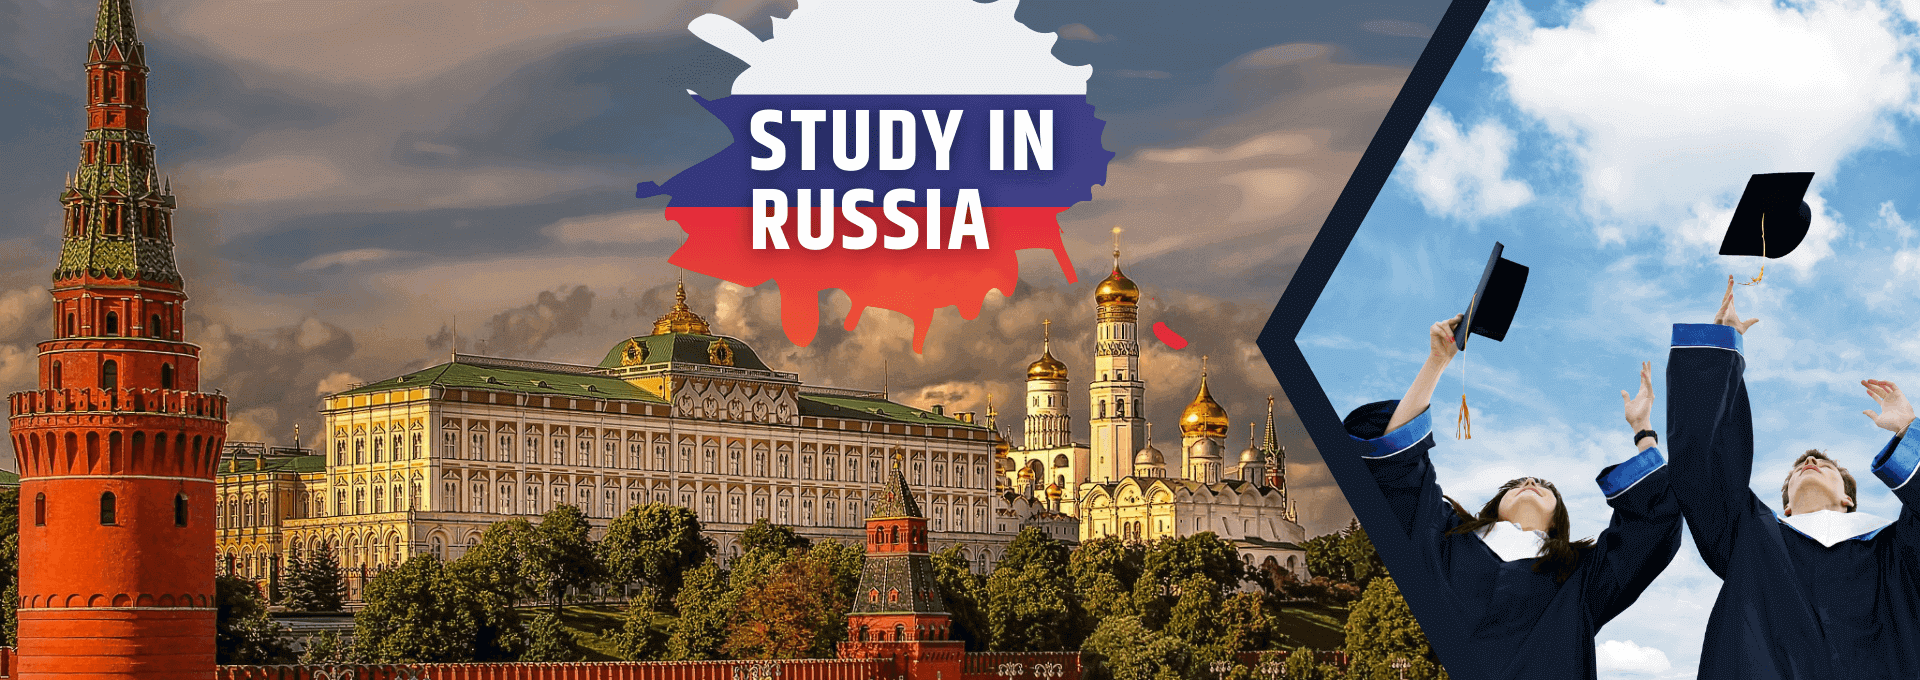 study in russia